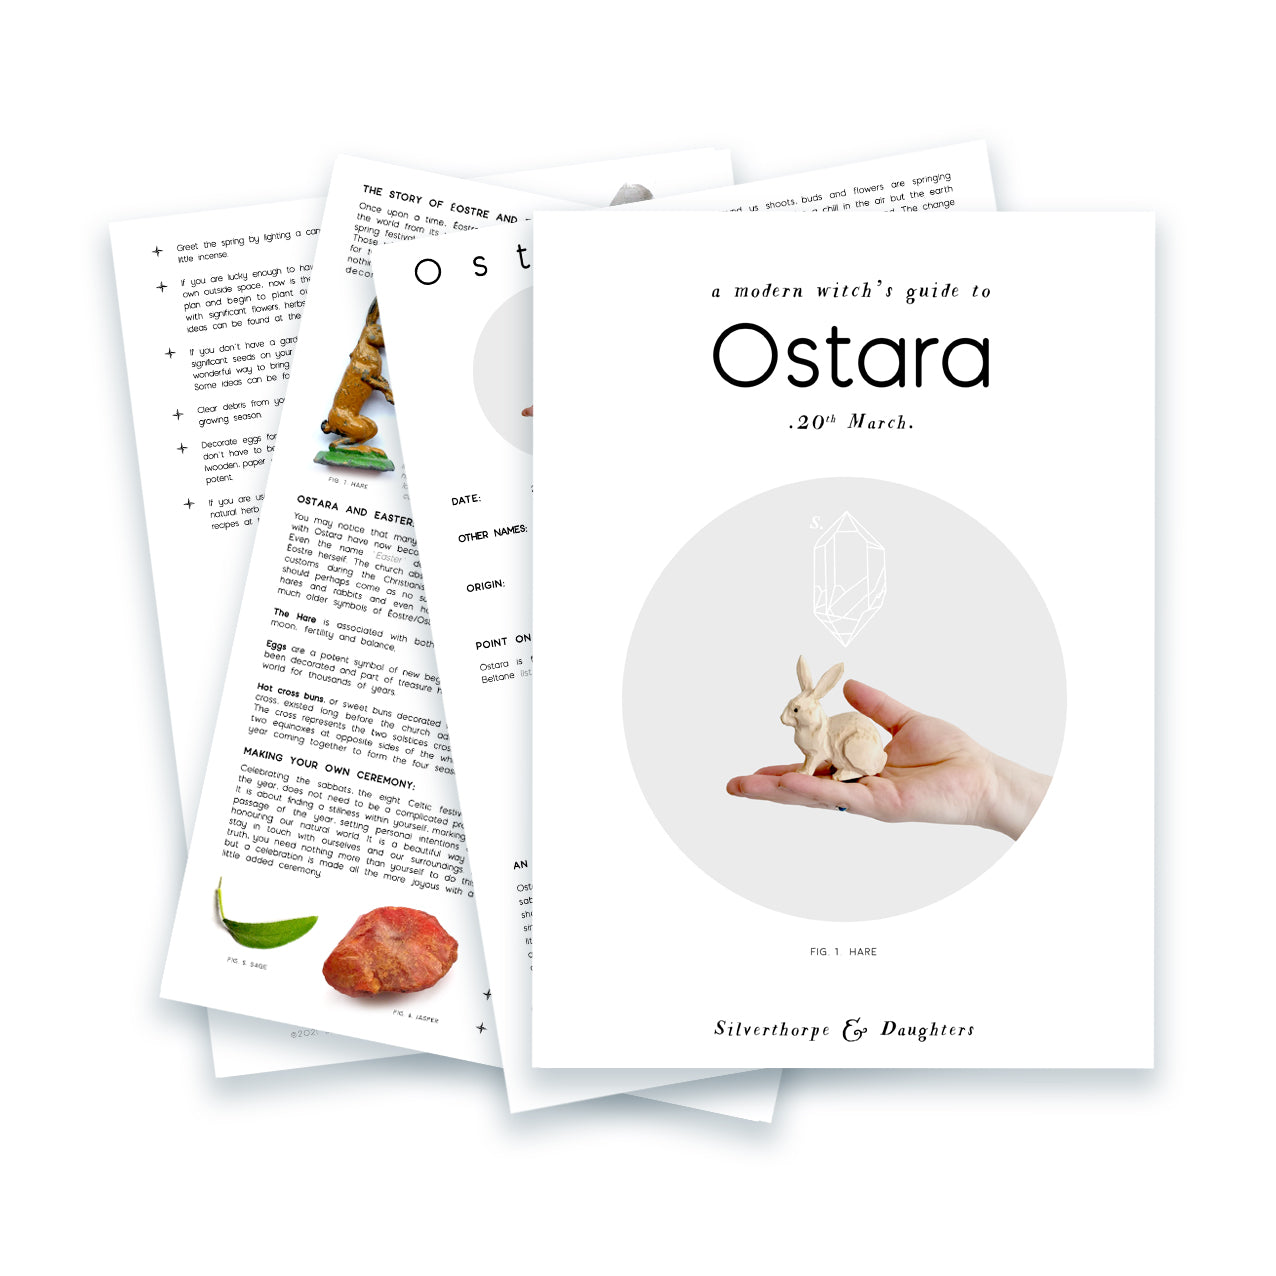 Ostara | Digital Sabbat Guide